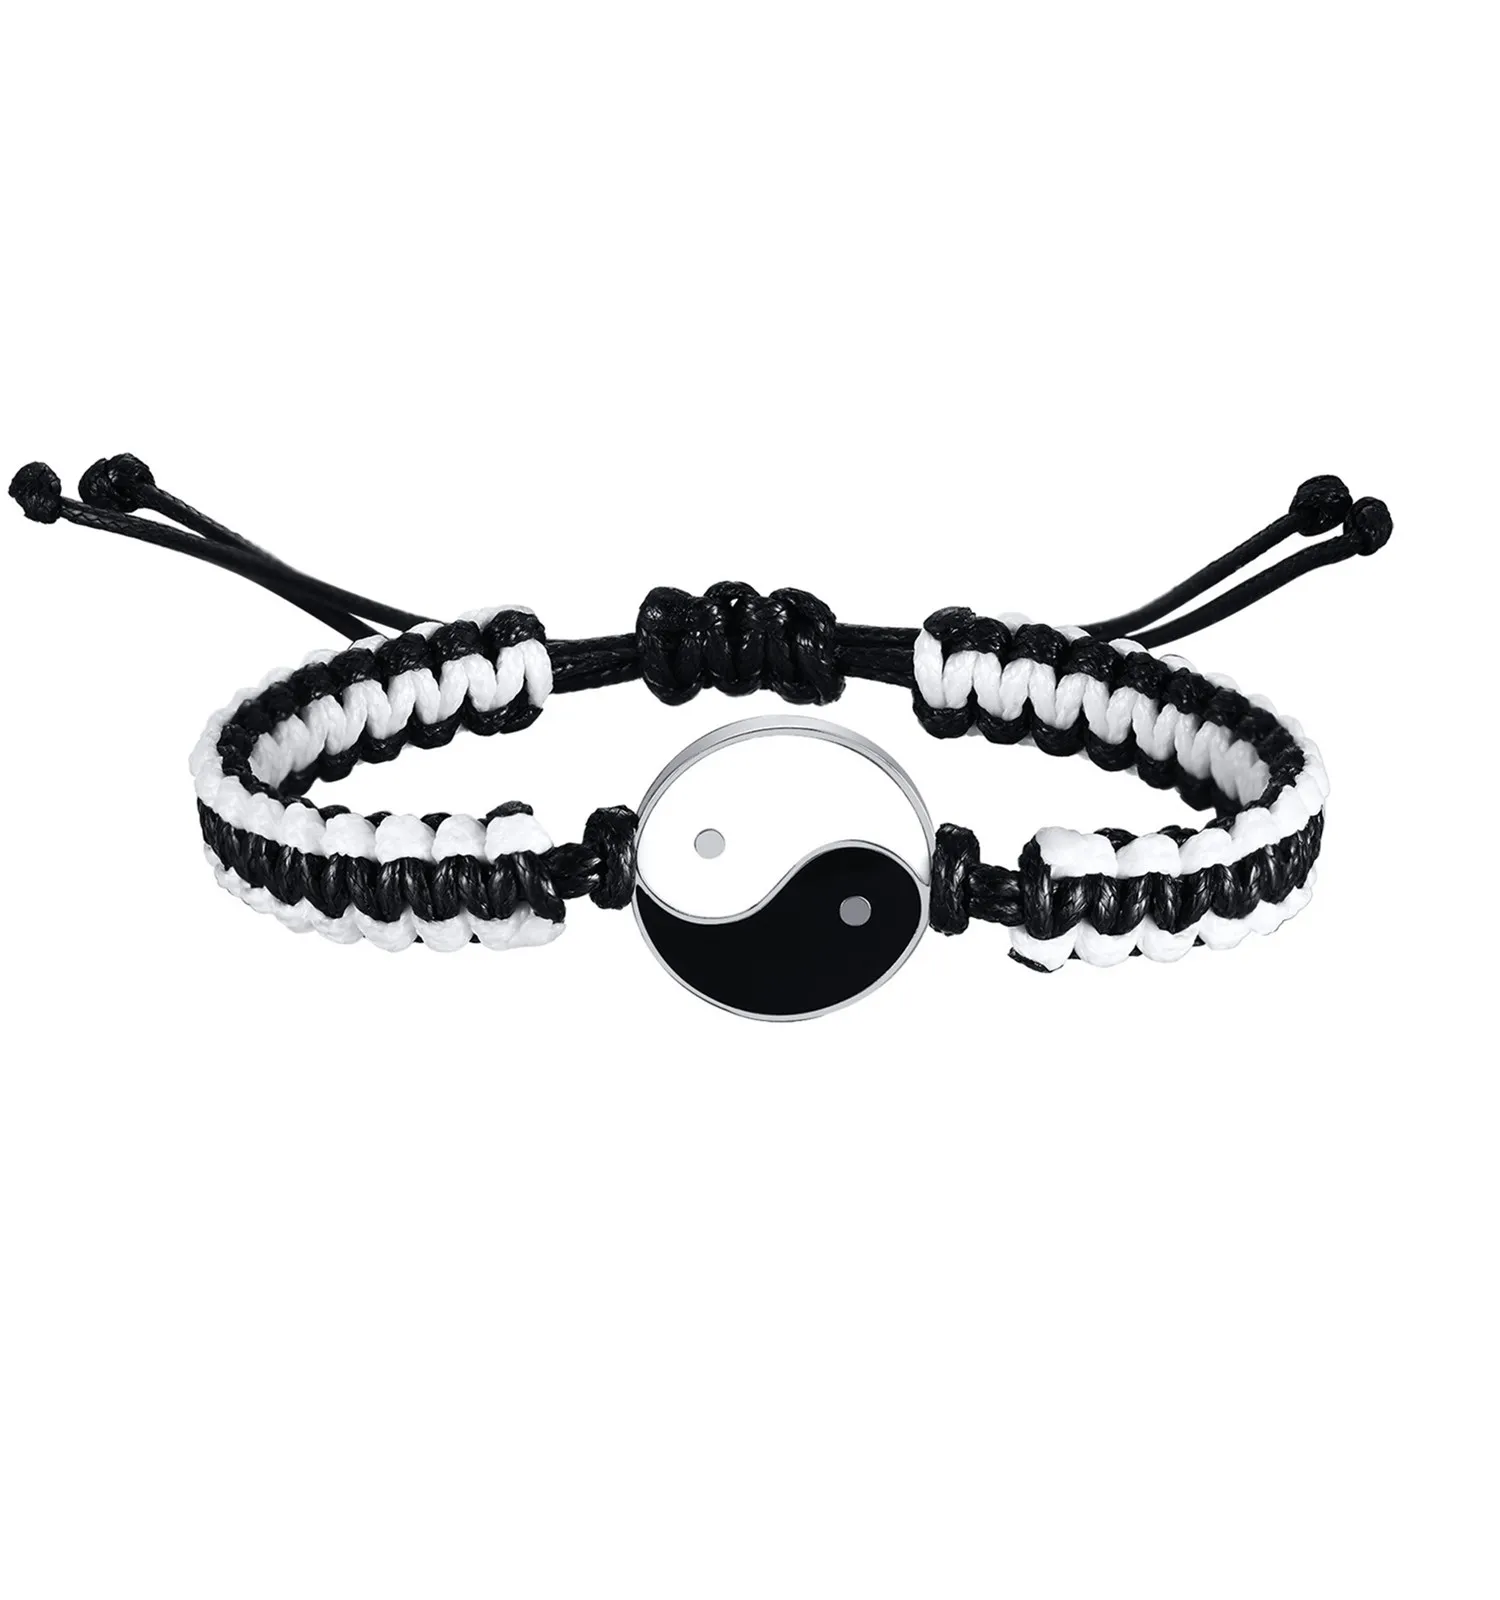 

Yin Yang Braided Bracelet for Men Women Black White Balance Wax Rope Surfer Cuff Wristband Adjustable